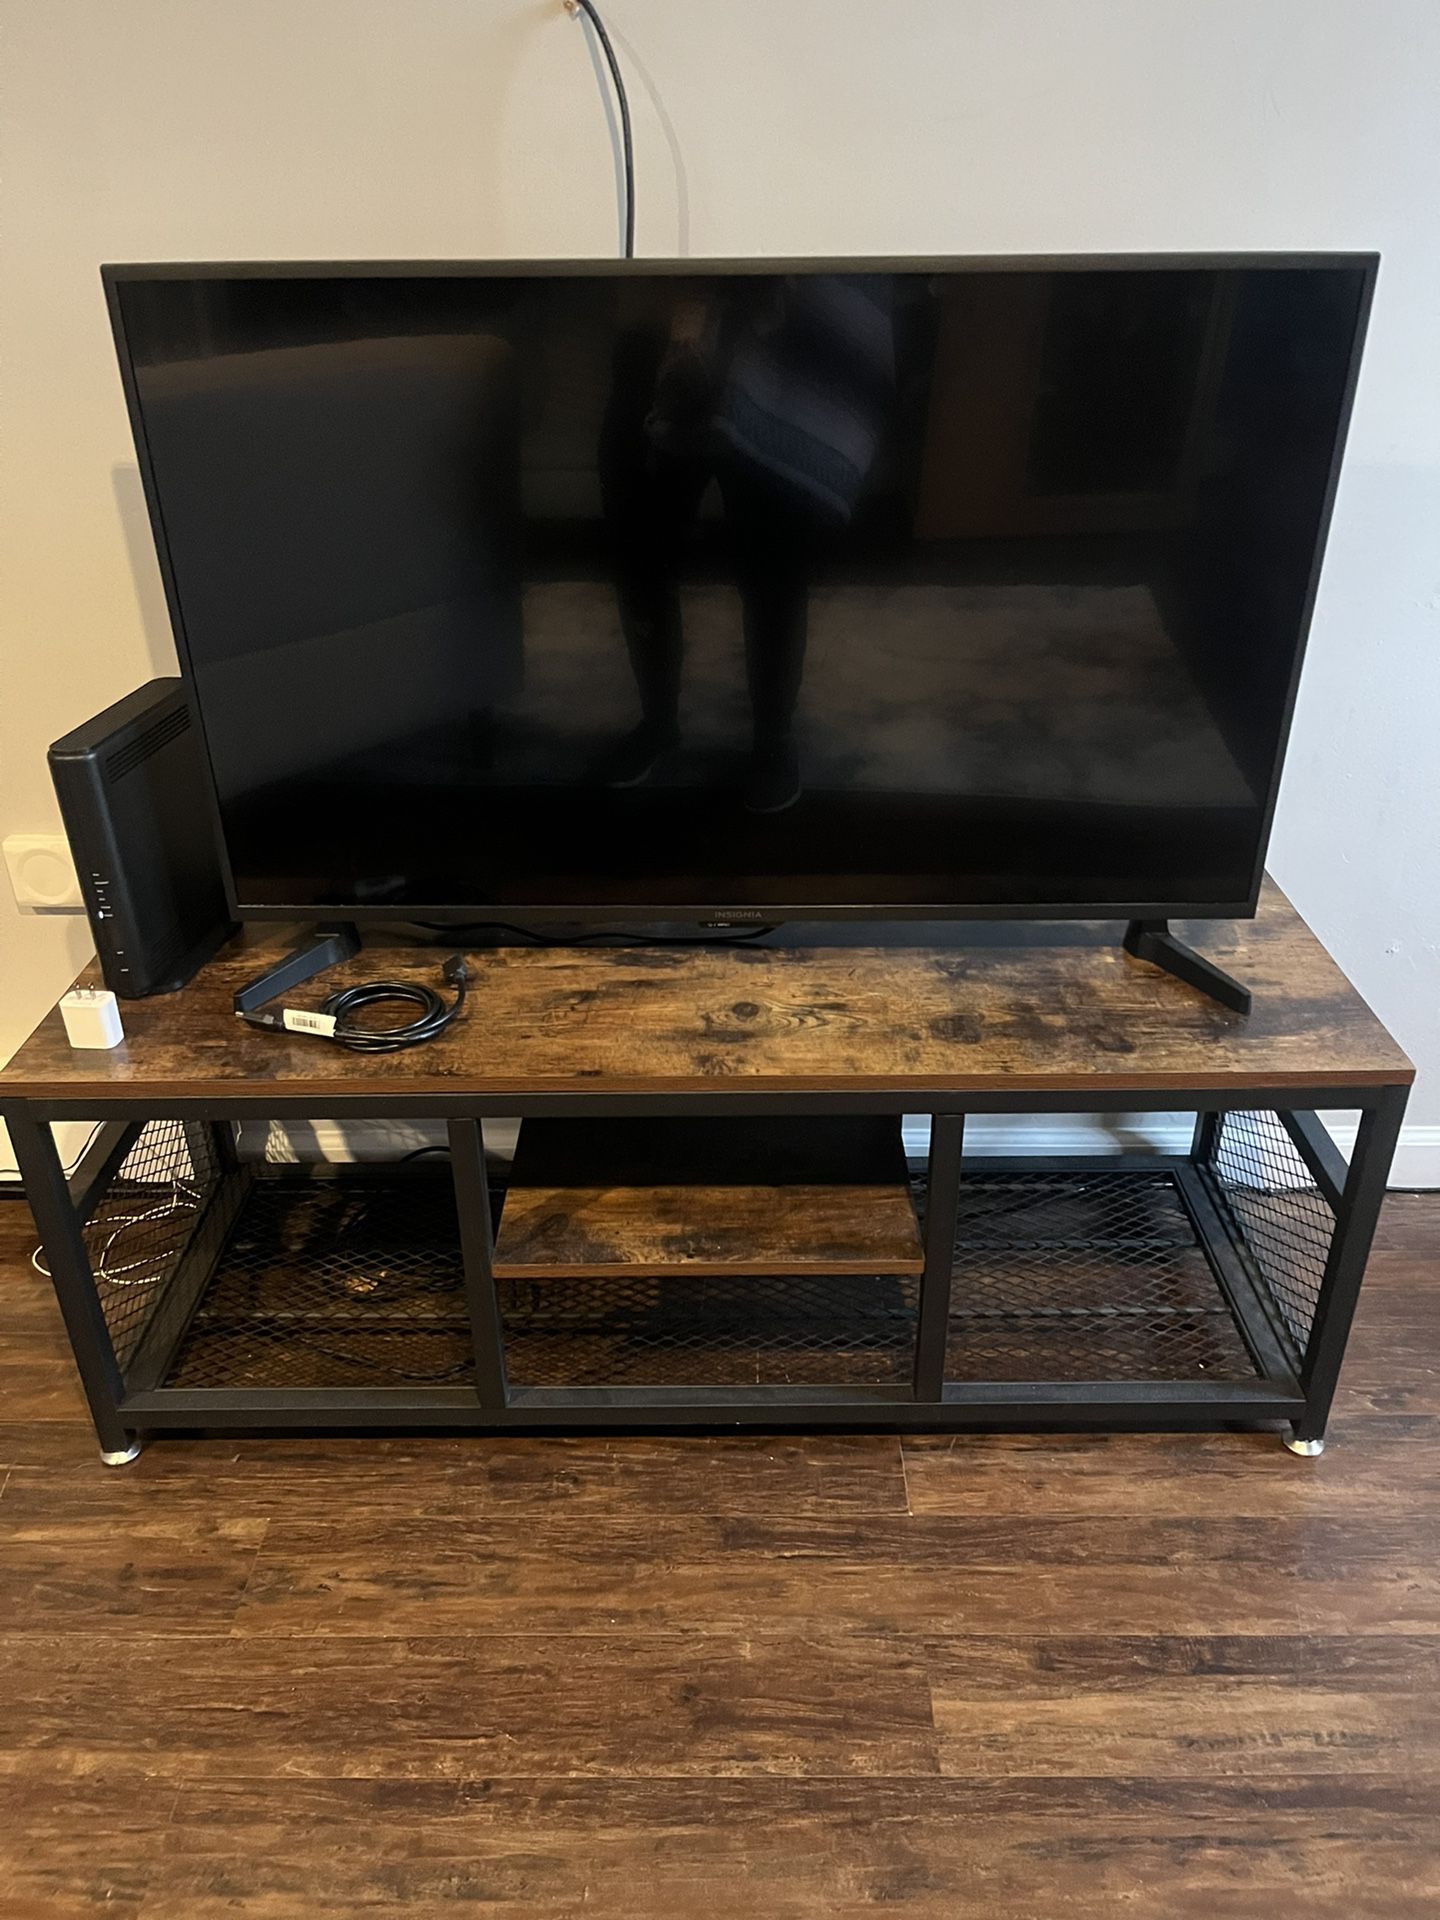 43” Flat screen TV. Amazon fire TV Plus TV Stand